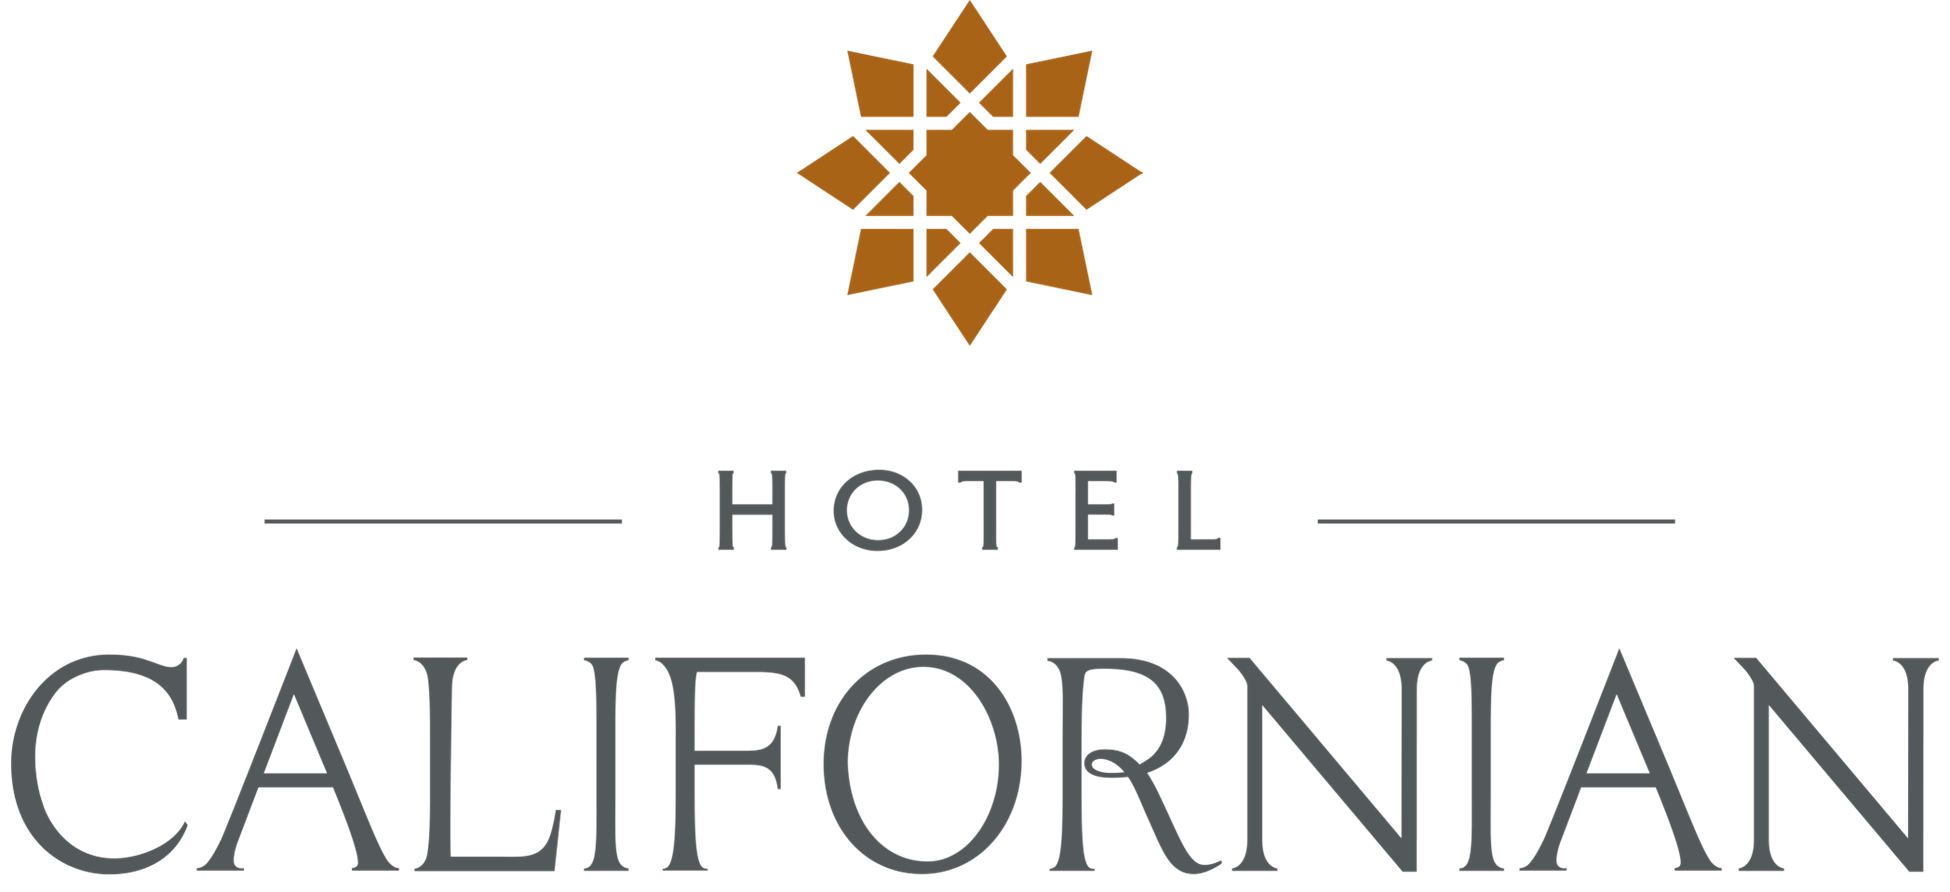 hotel californian black